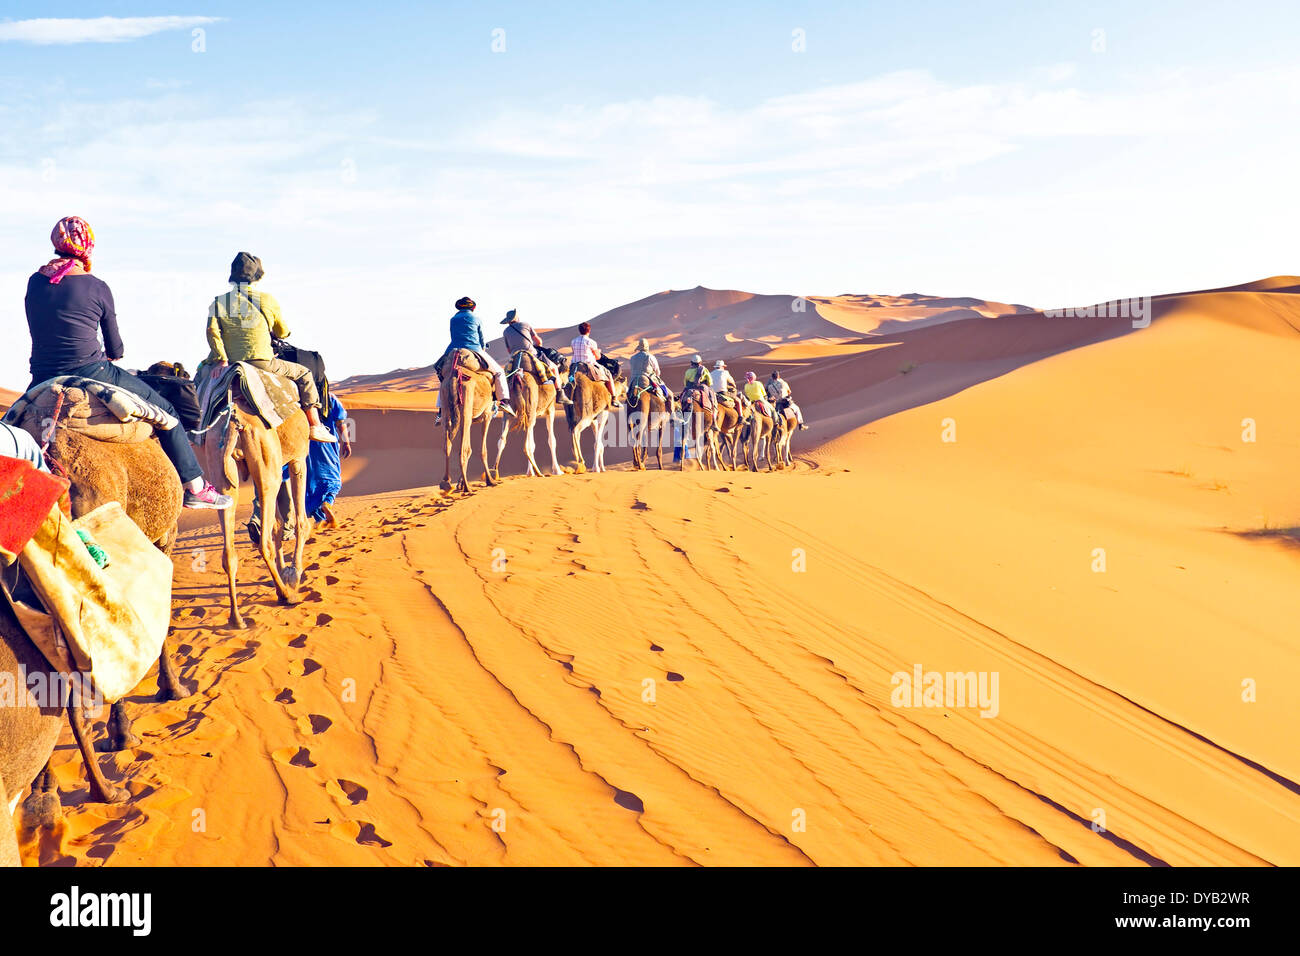 Camel caravan going through the sand dunes in the Sahara Stock Photo